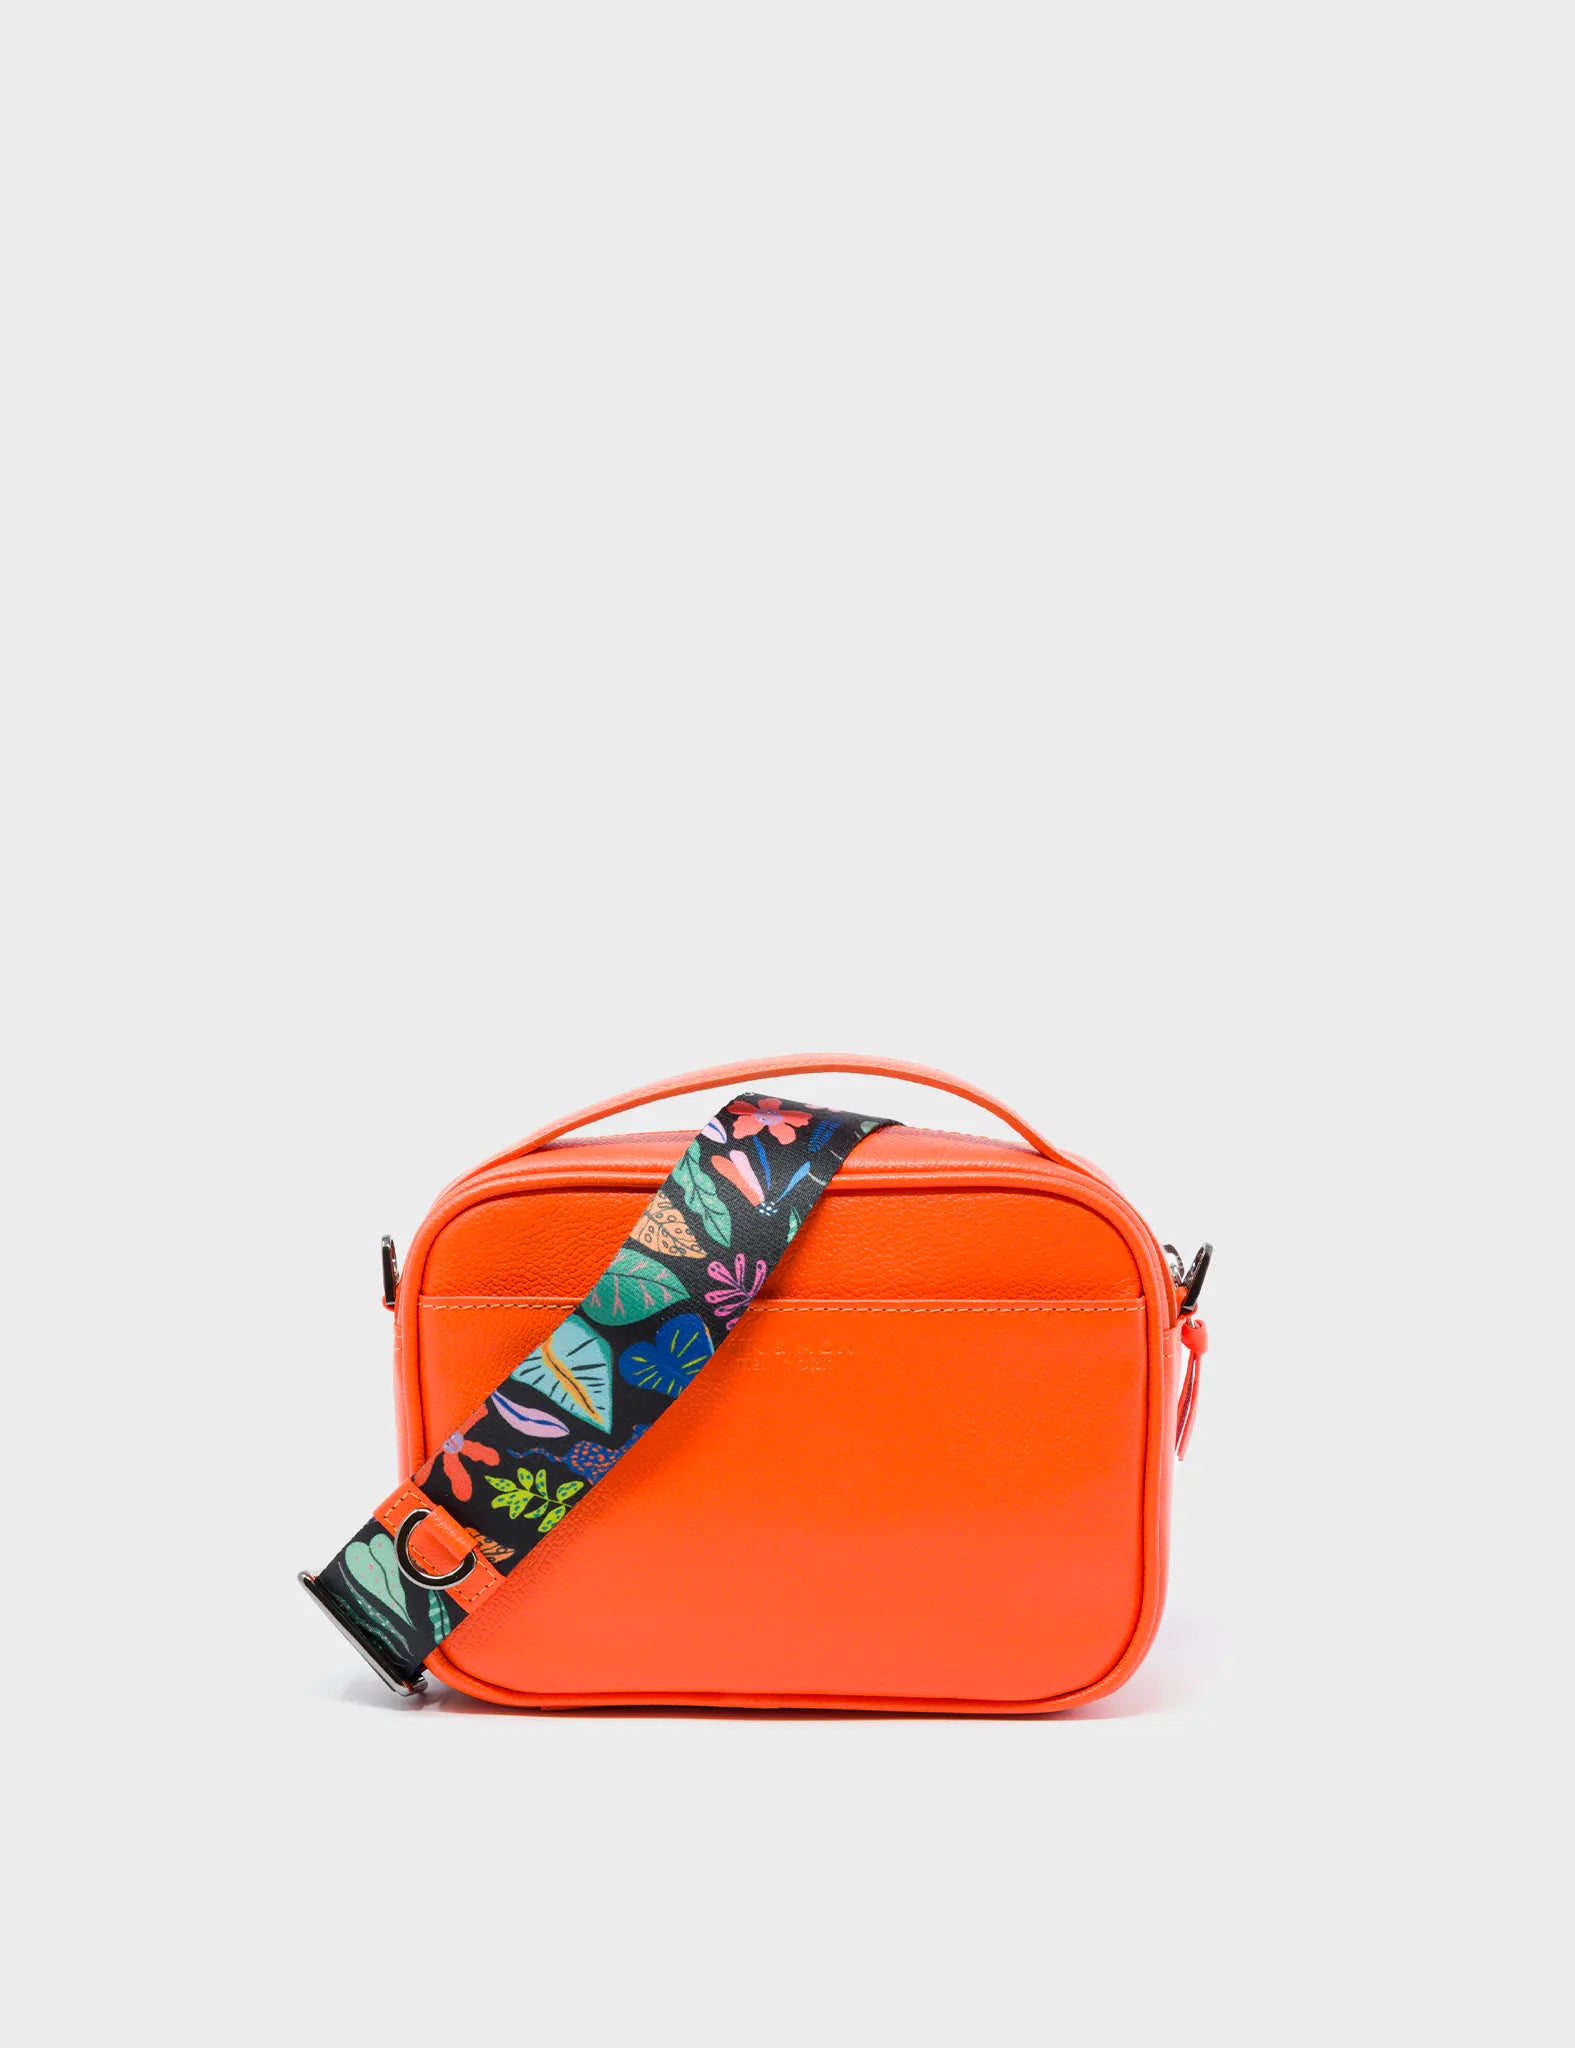 Verto Crossbody Vermillion Orange Leather Handbag - Tiger and Flowers Embroidery - Back 